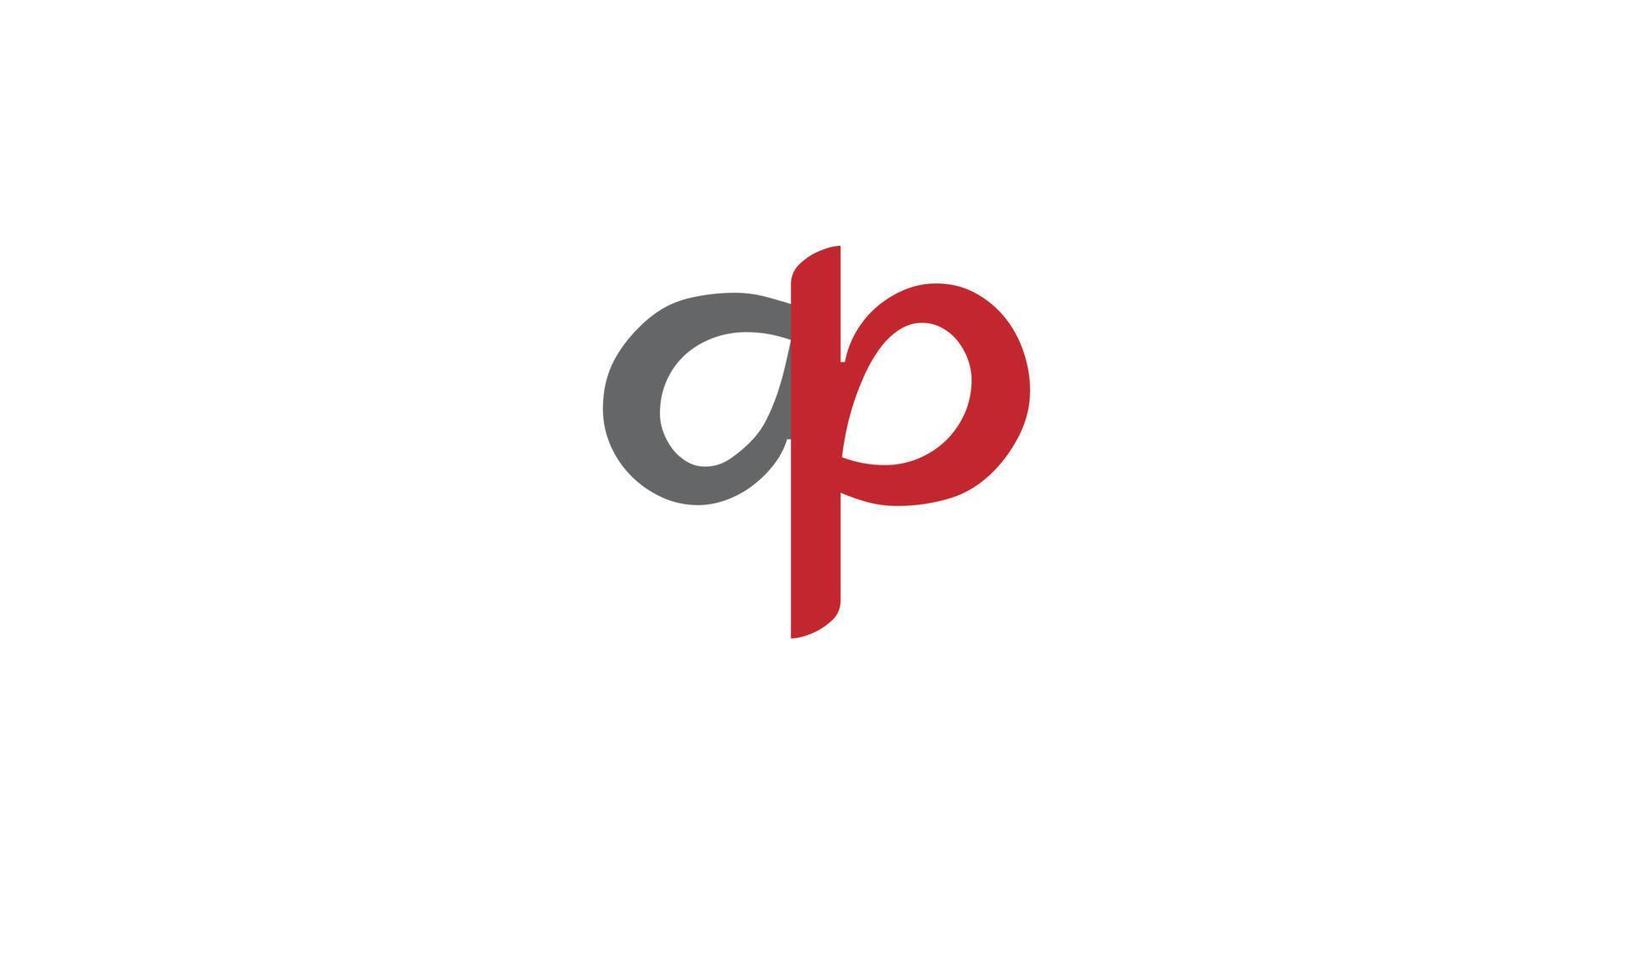 alfabet letters initialen monogram logo qp, pq, q en p vector